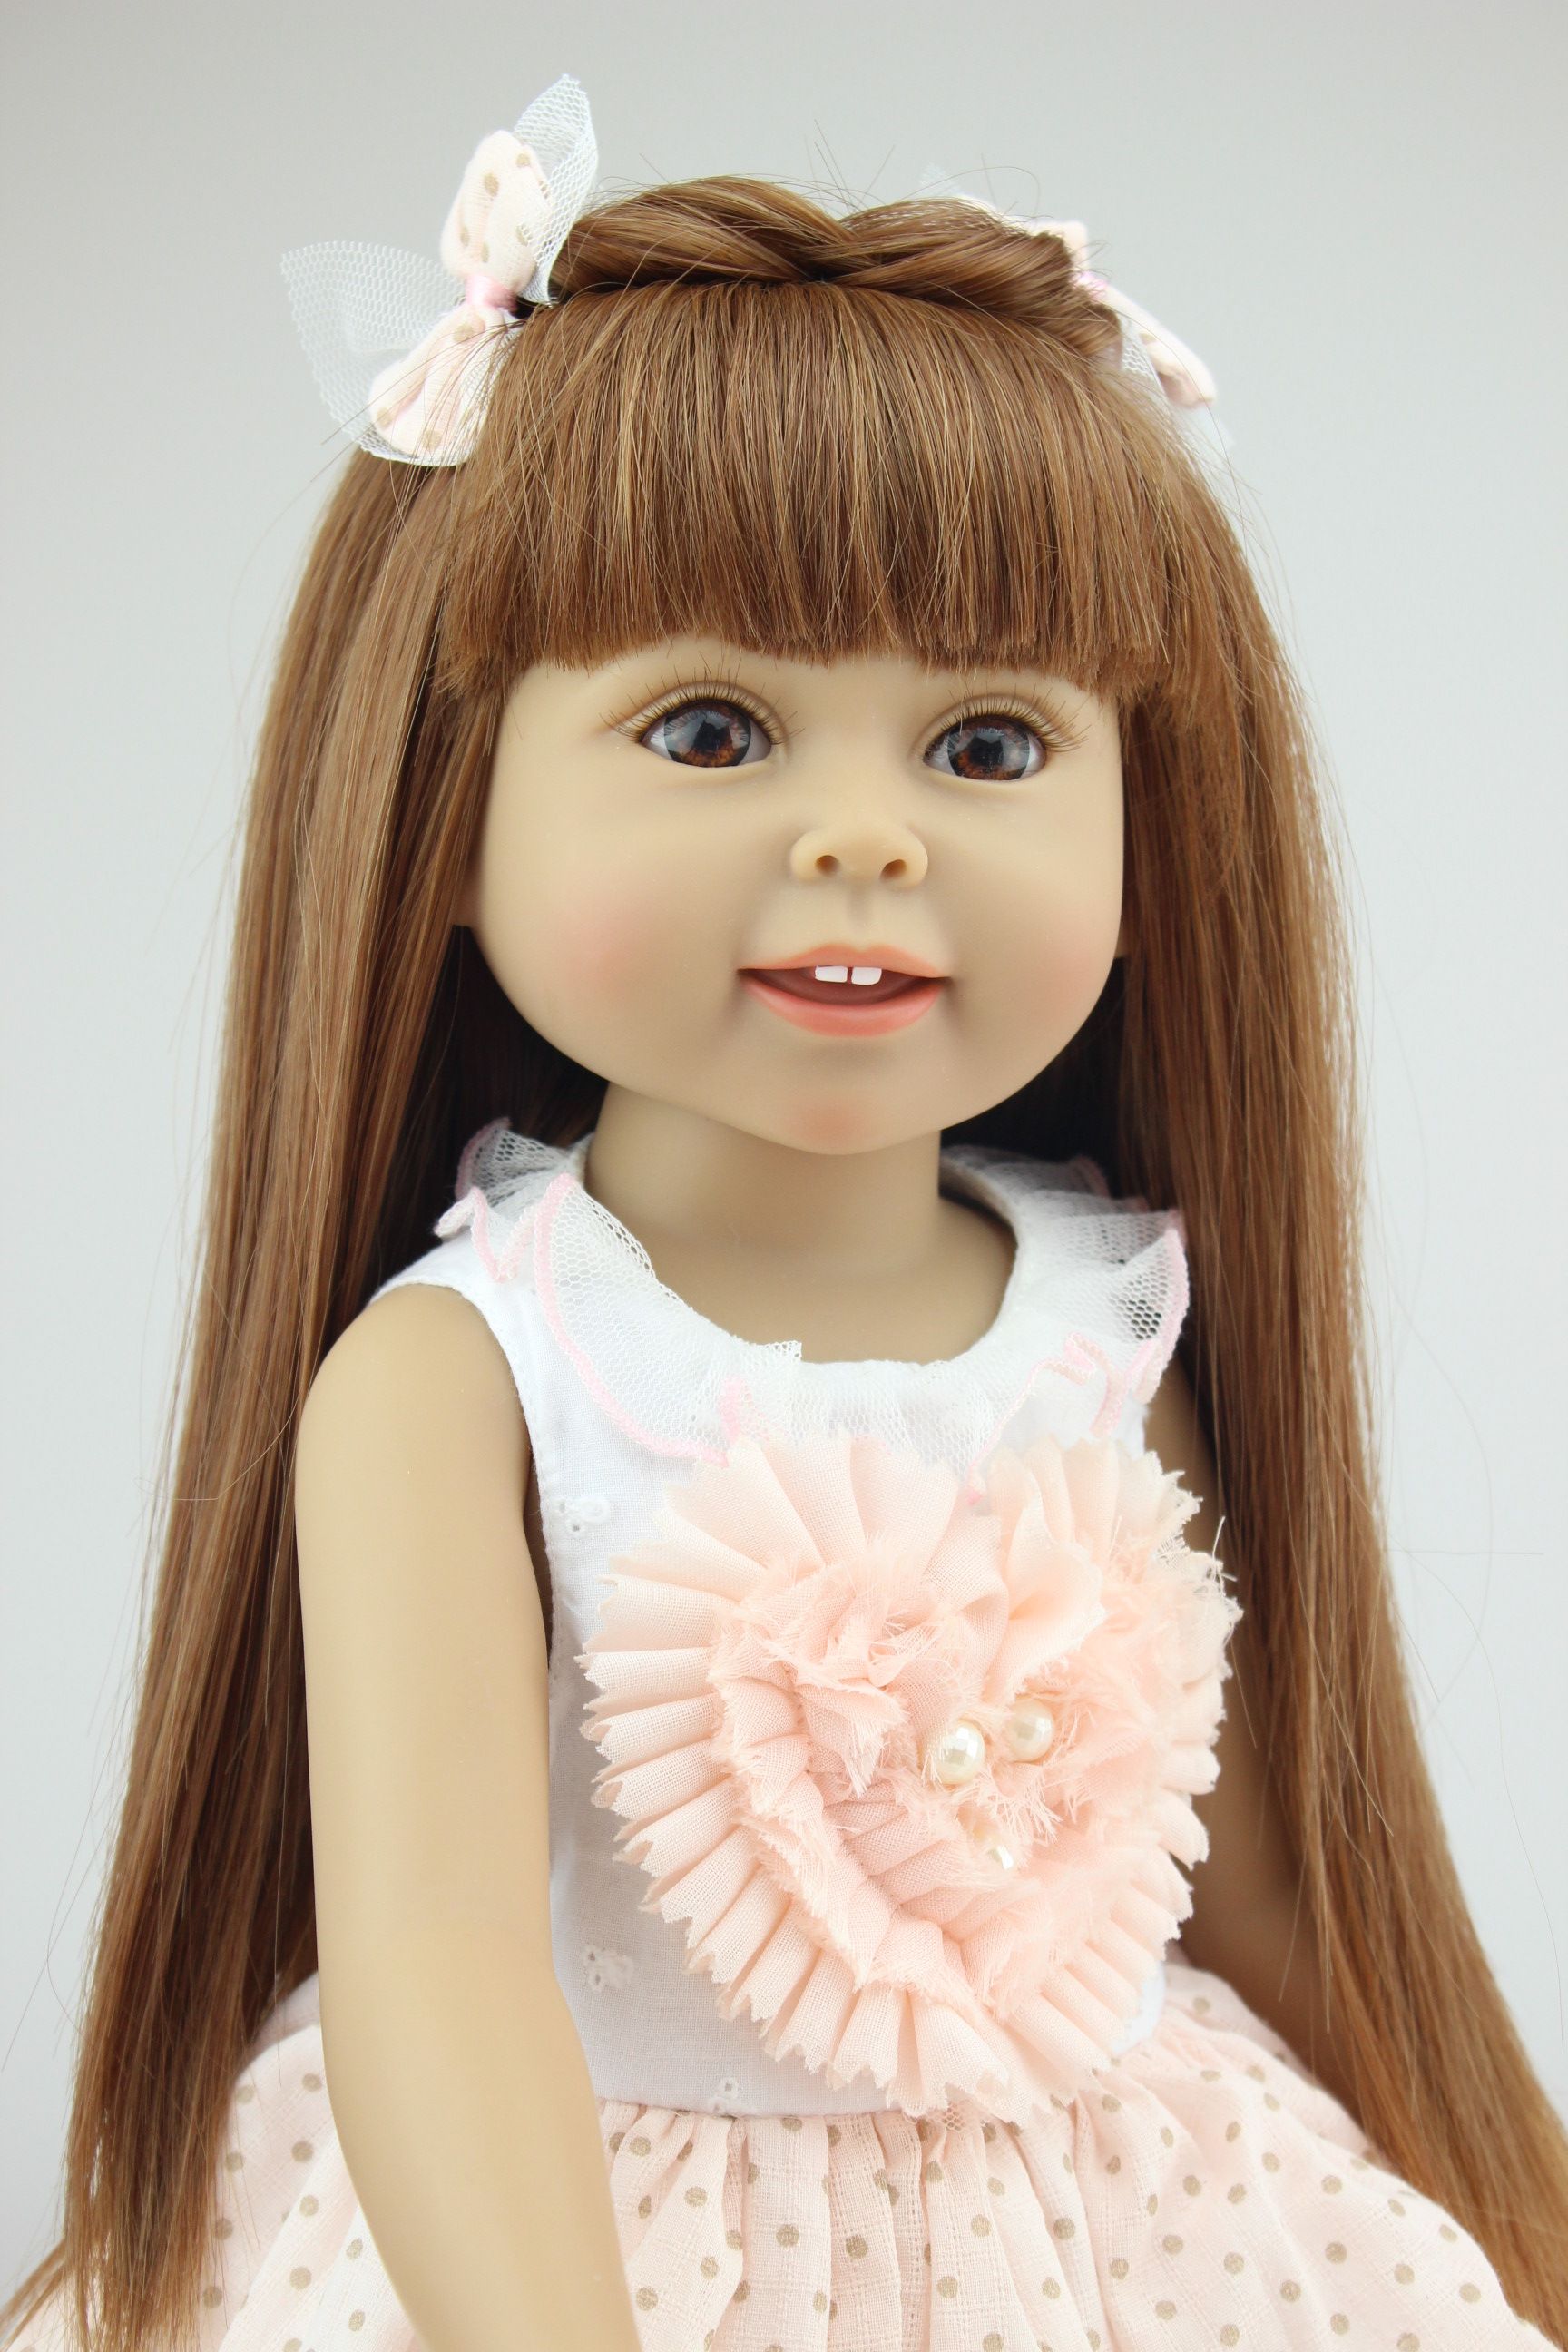 Doll Fashion Collectilble Full Vinyl American Girl 18 Inch Play Dolls